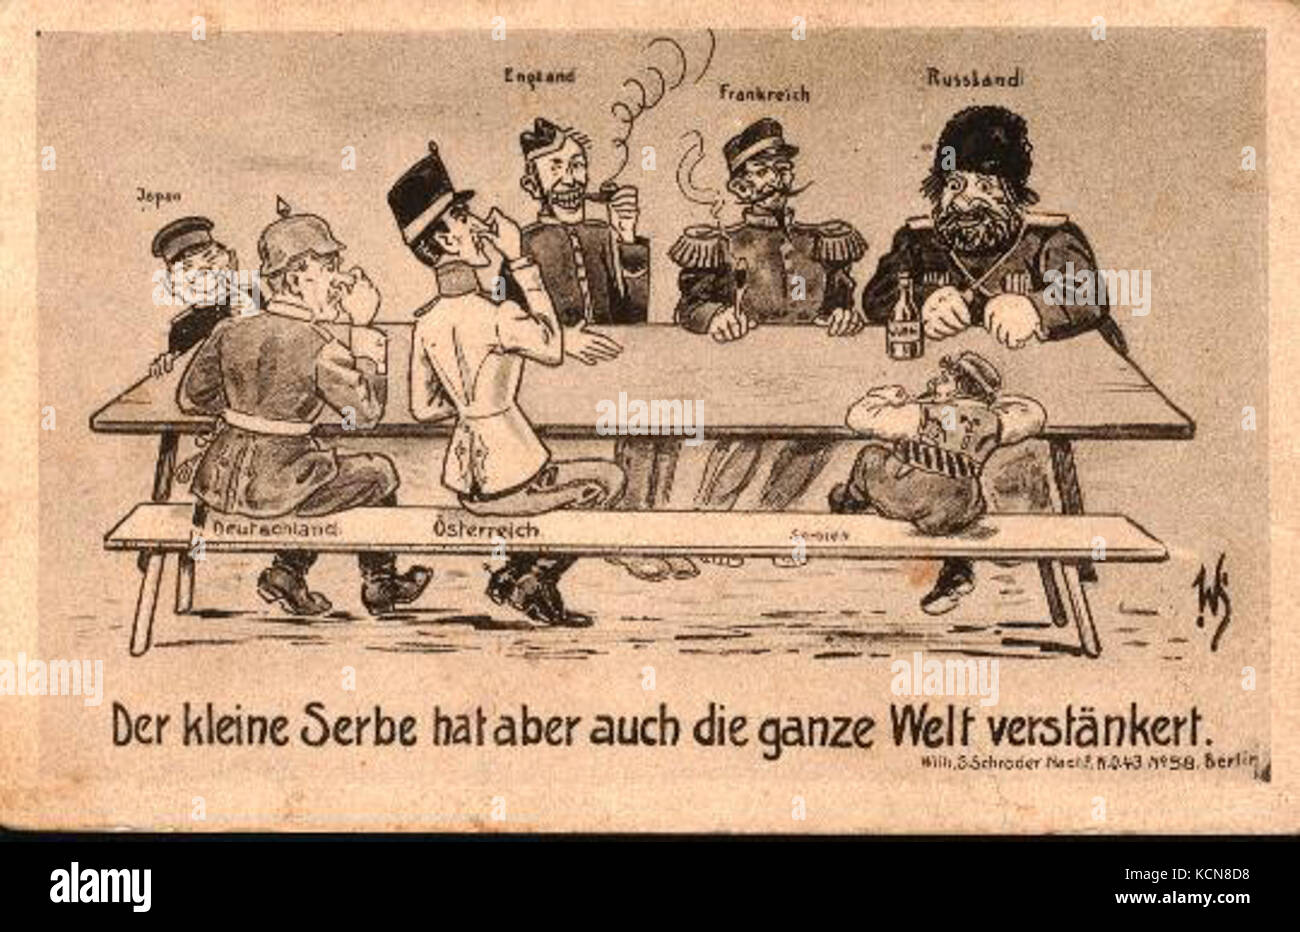 Austria Hungary Wwi Propaganda Card Against Serbs 004 Stock Photo Alamy